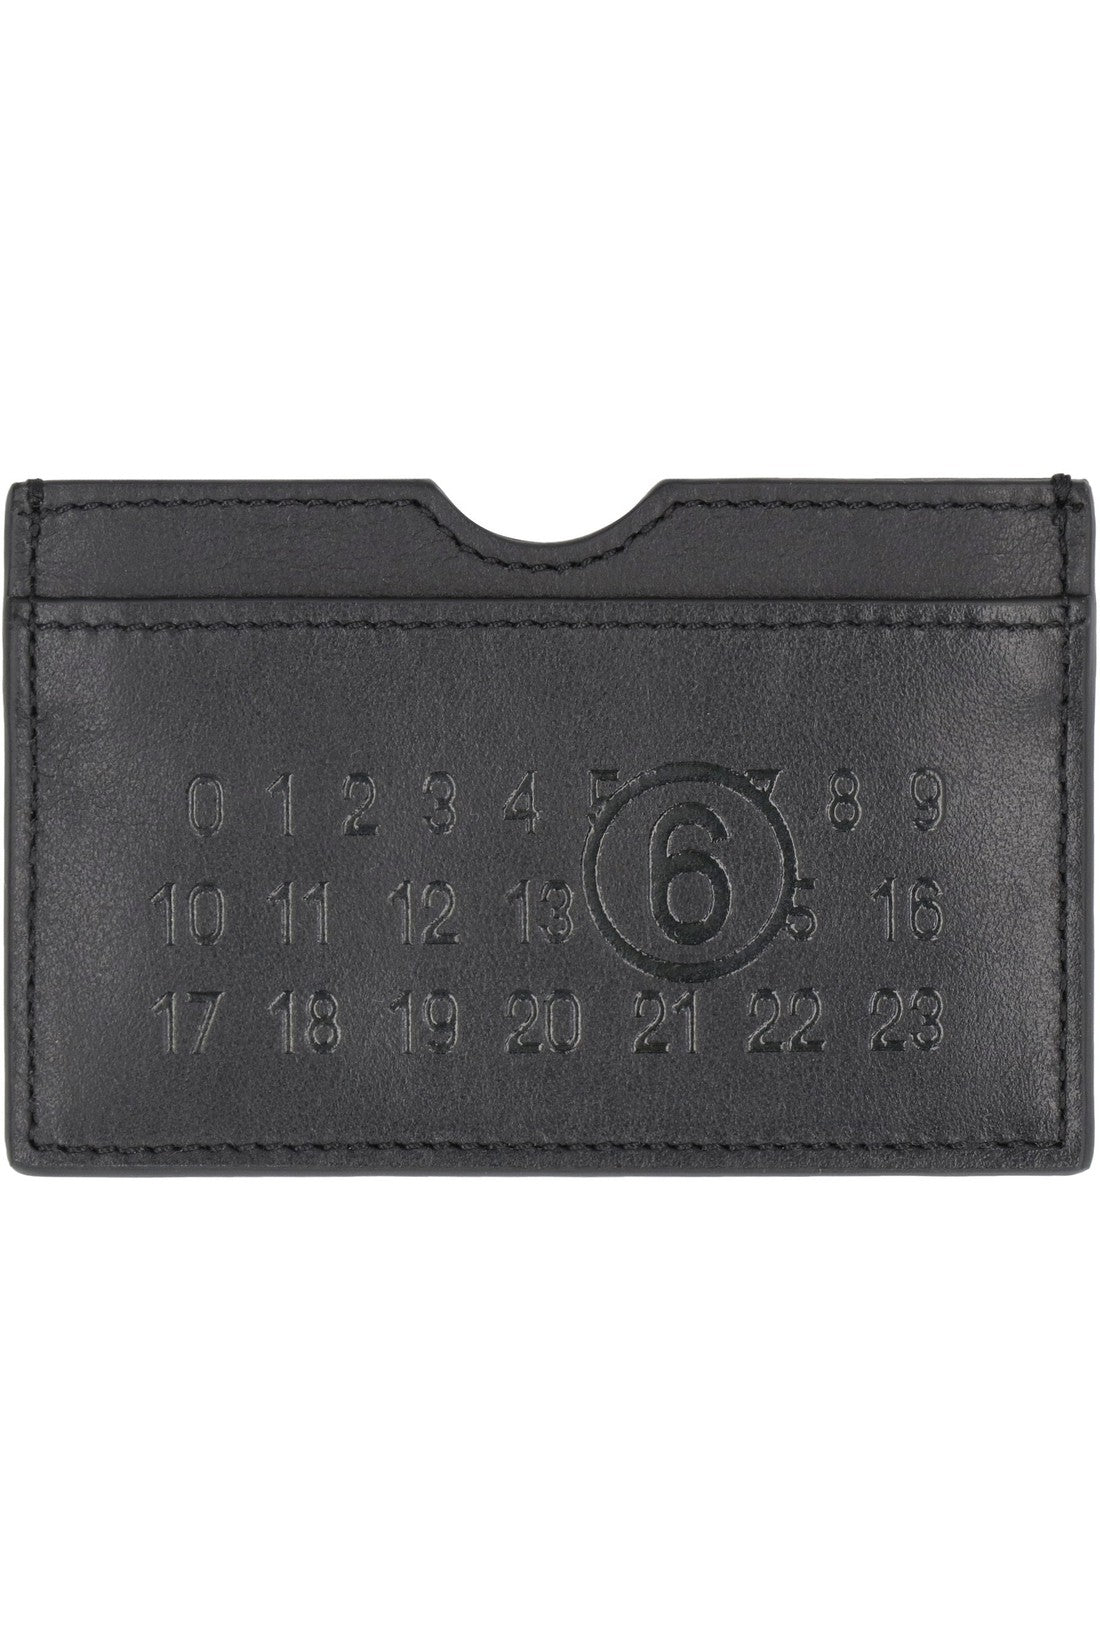 MM6 Maison Margiela-OUTLET-SALE-Leather card holder-ARCHIVIST